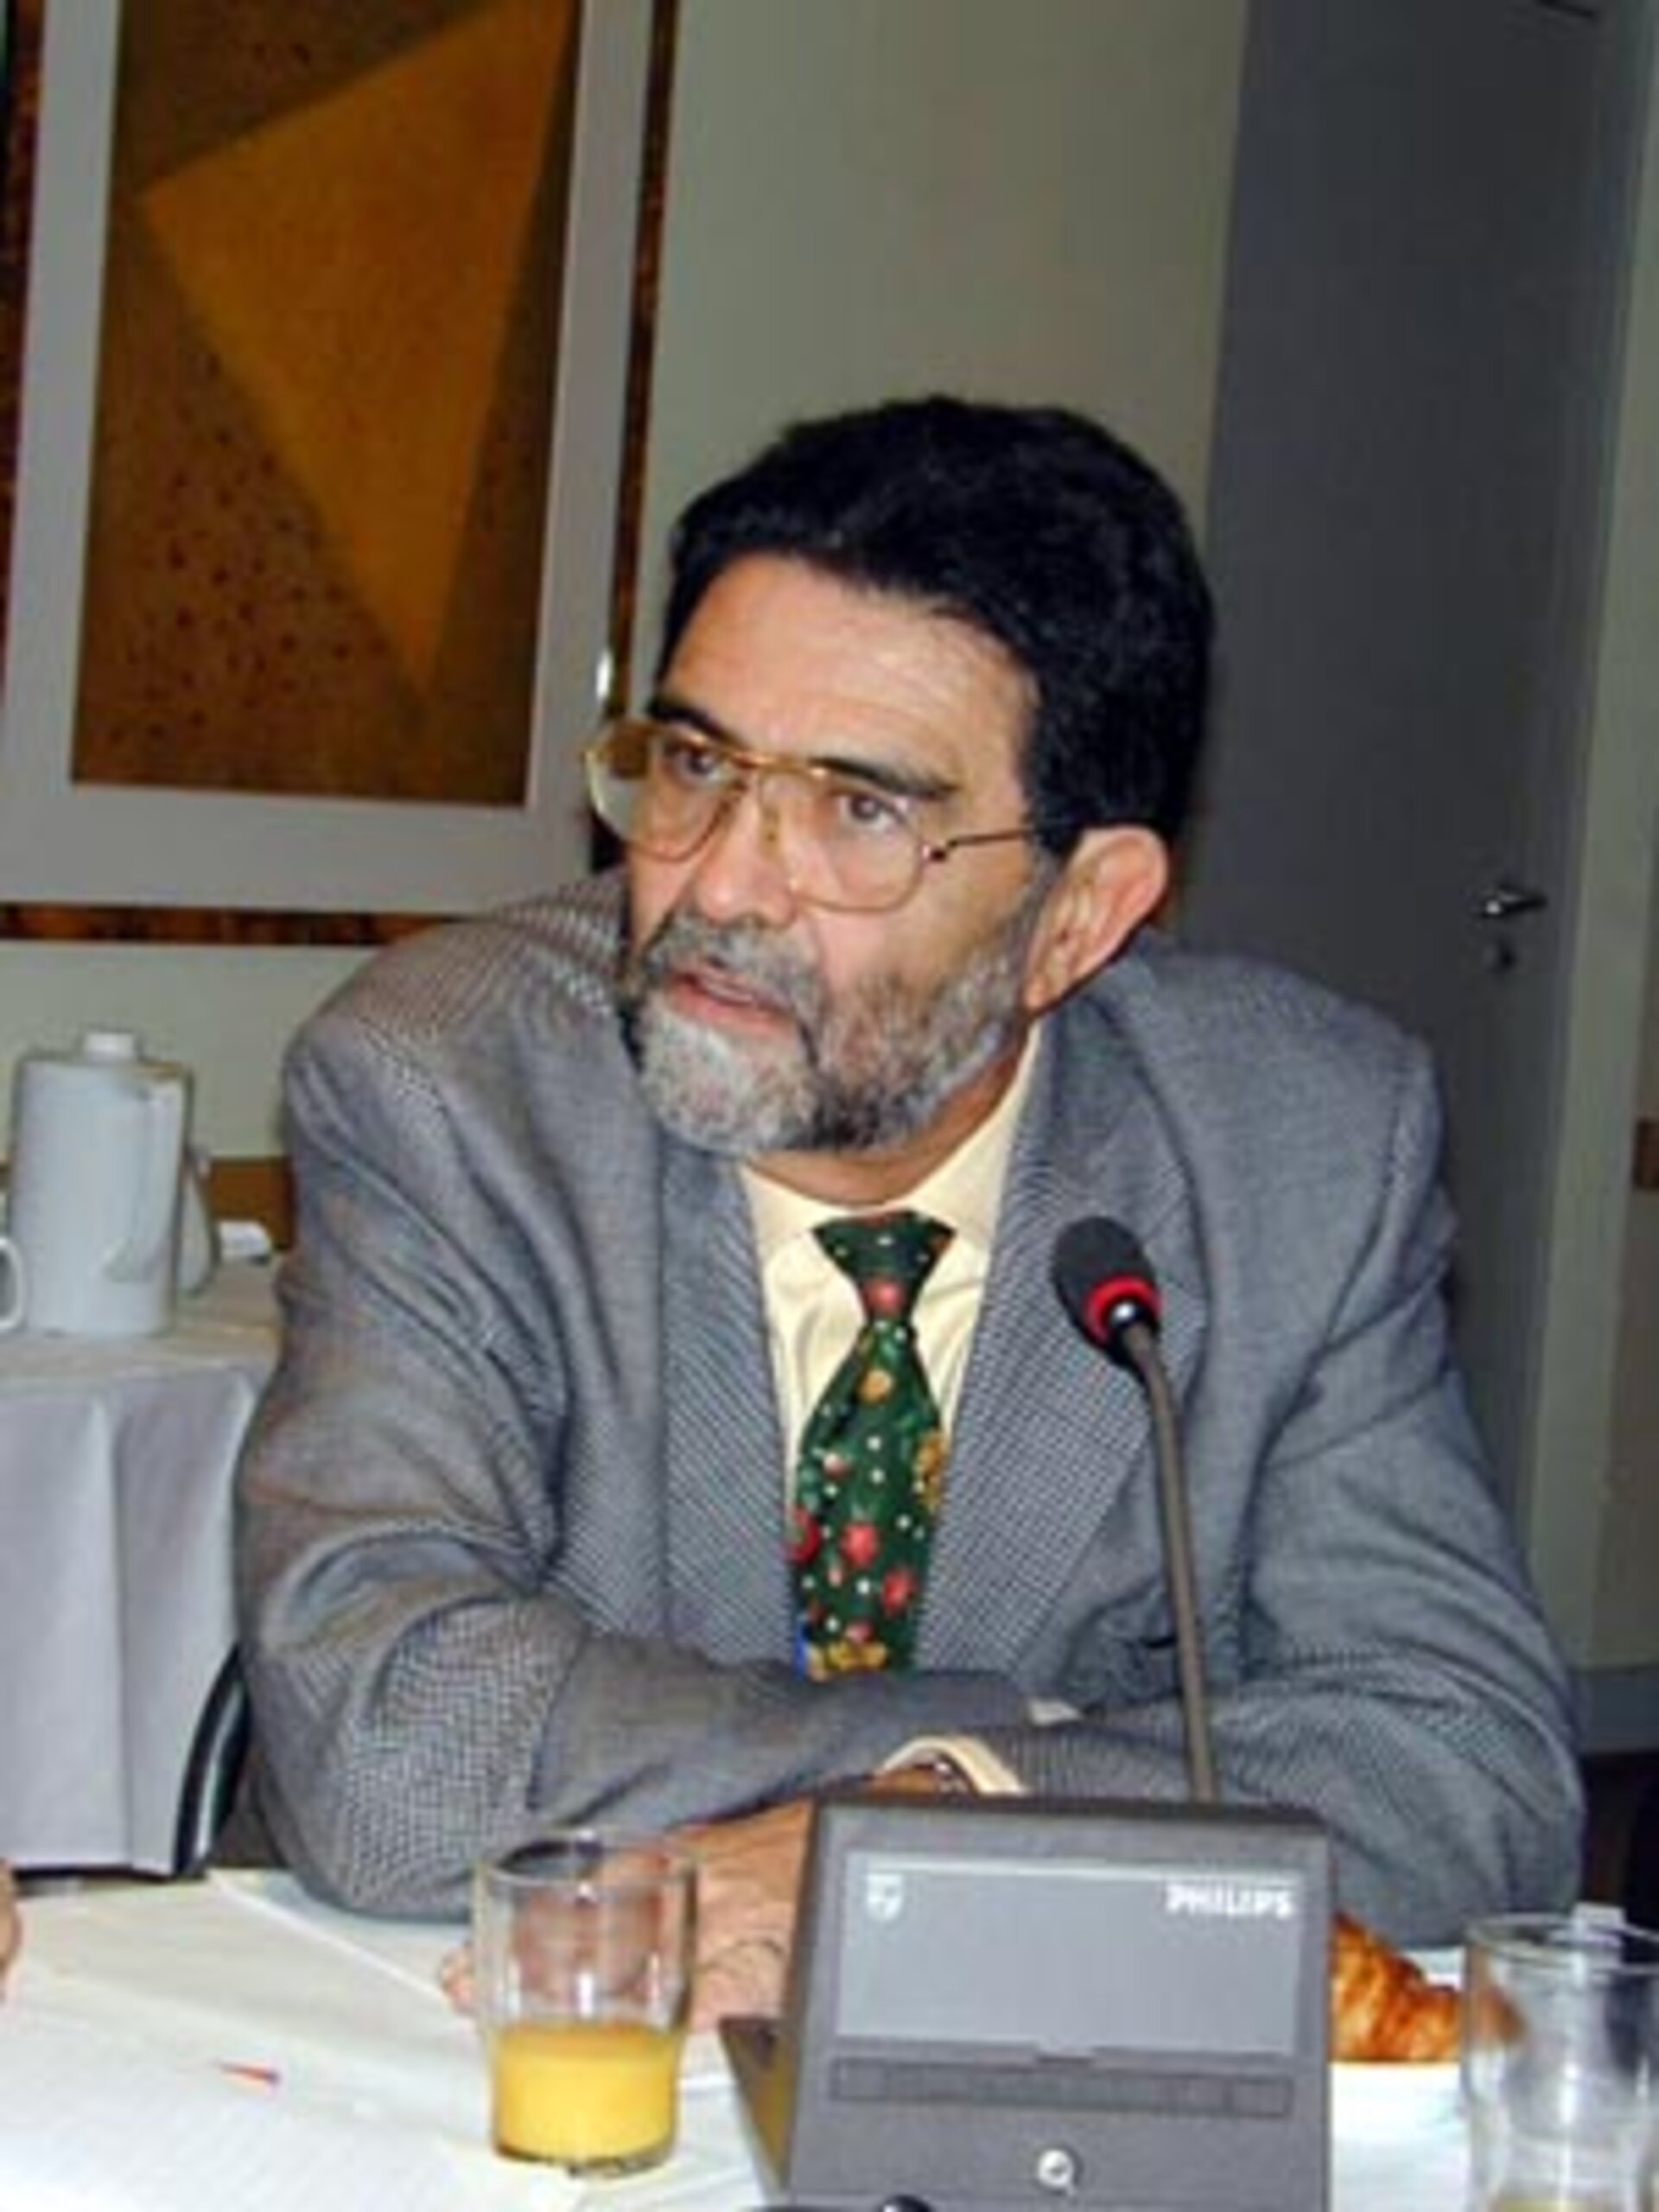 Claudio Mastracci, Director of Applications